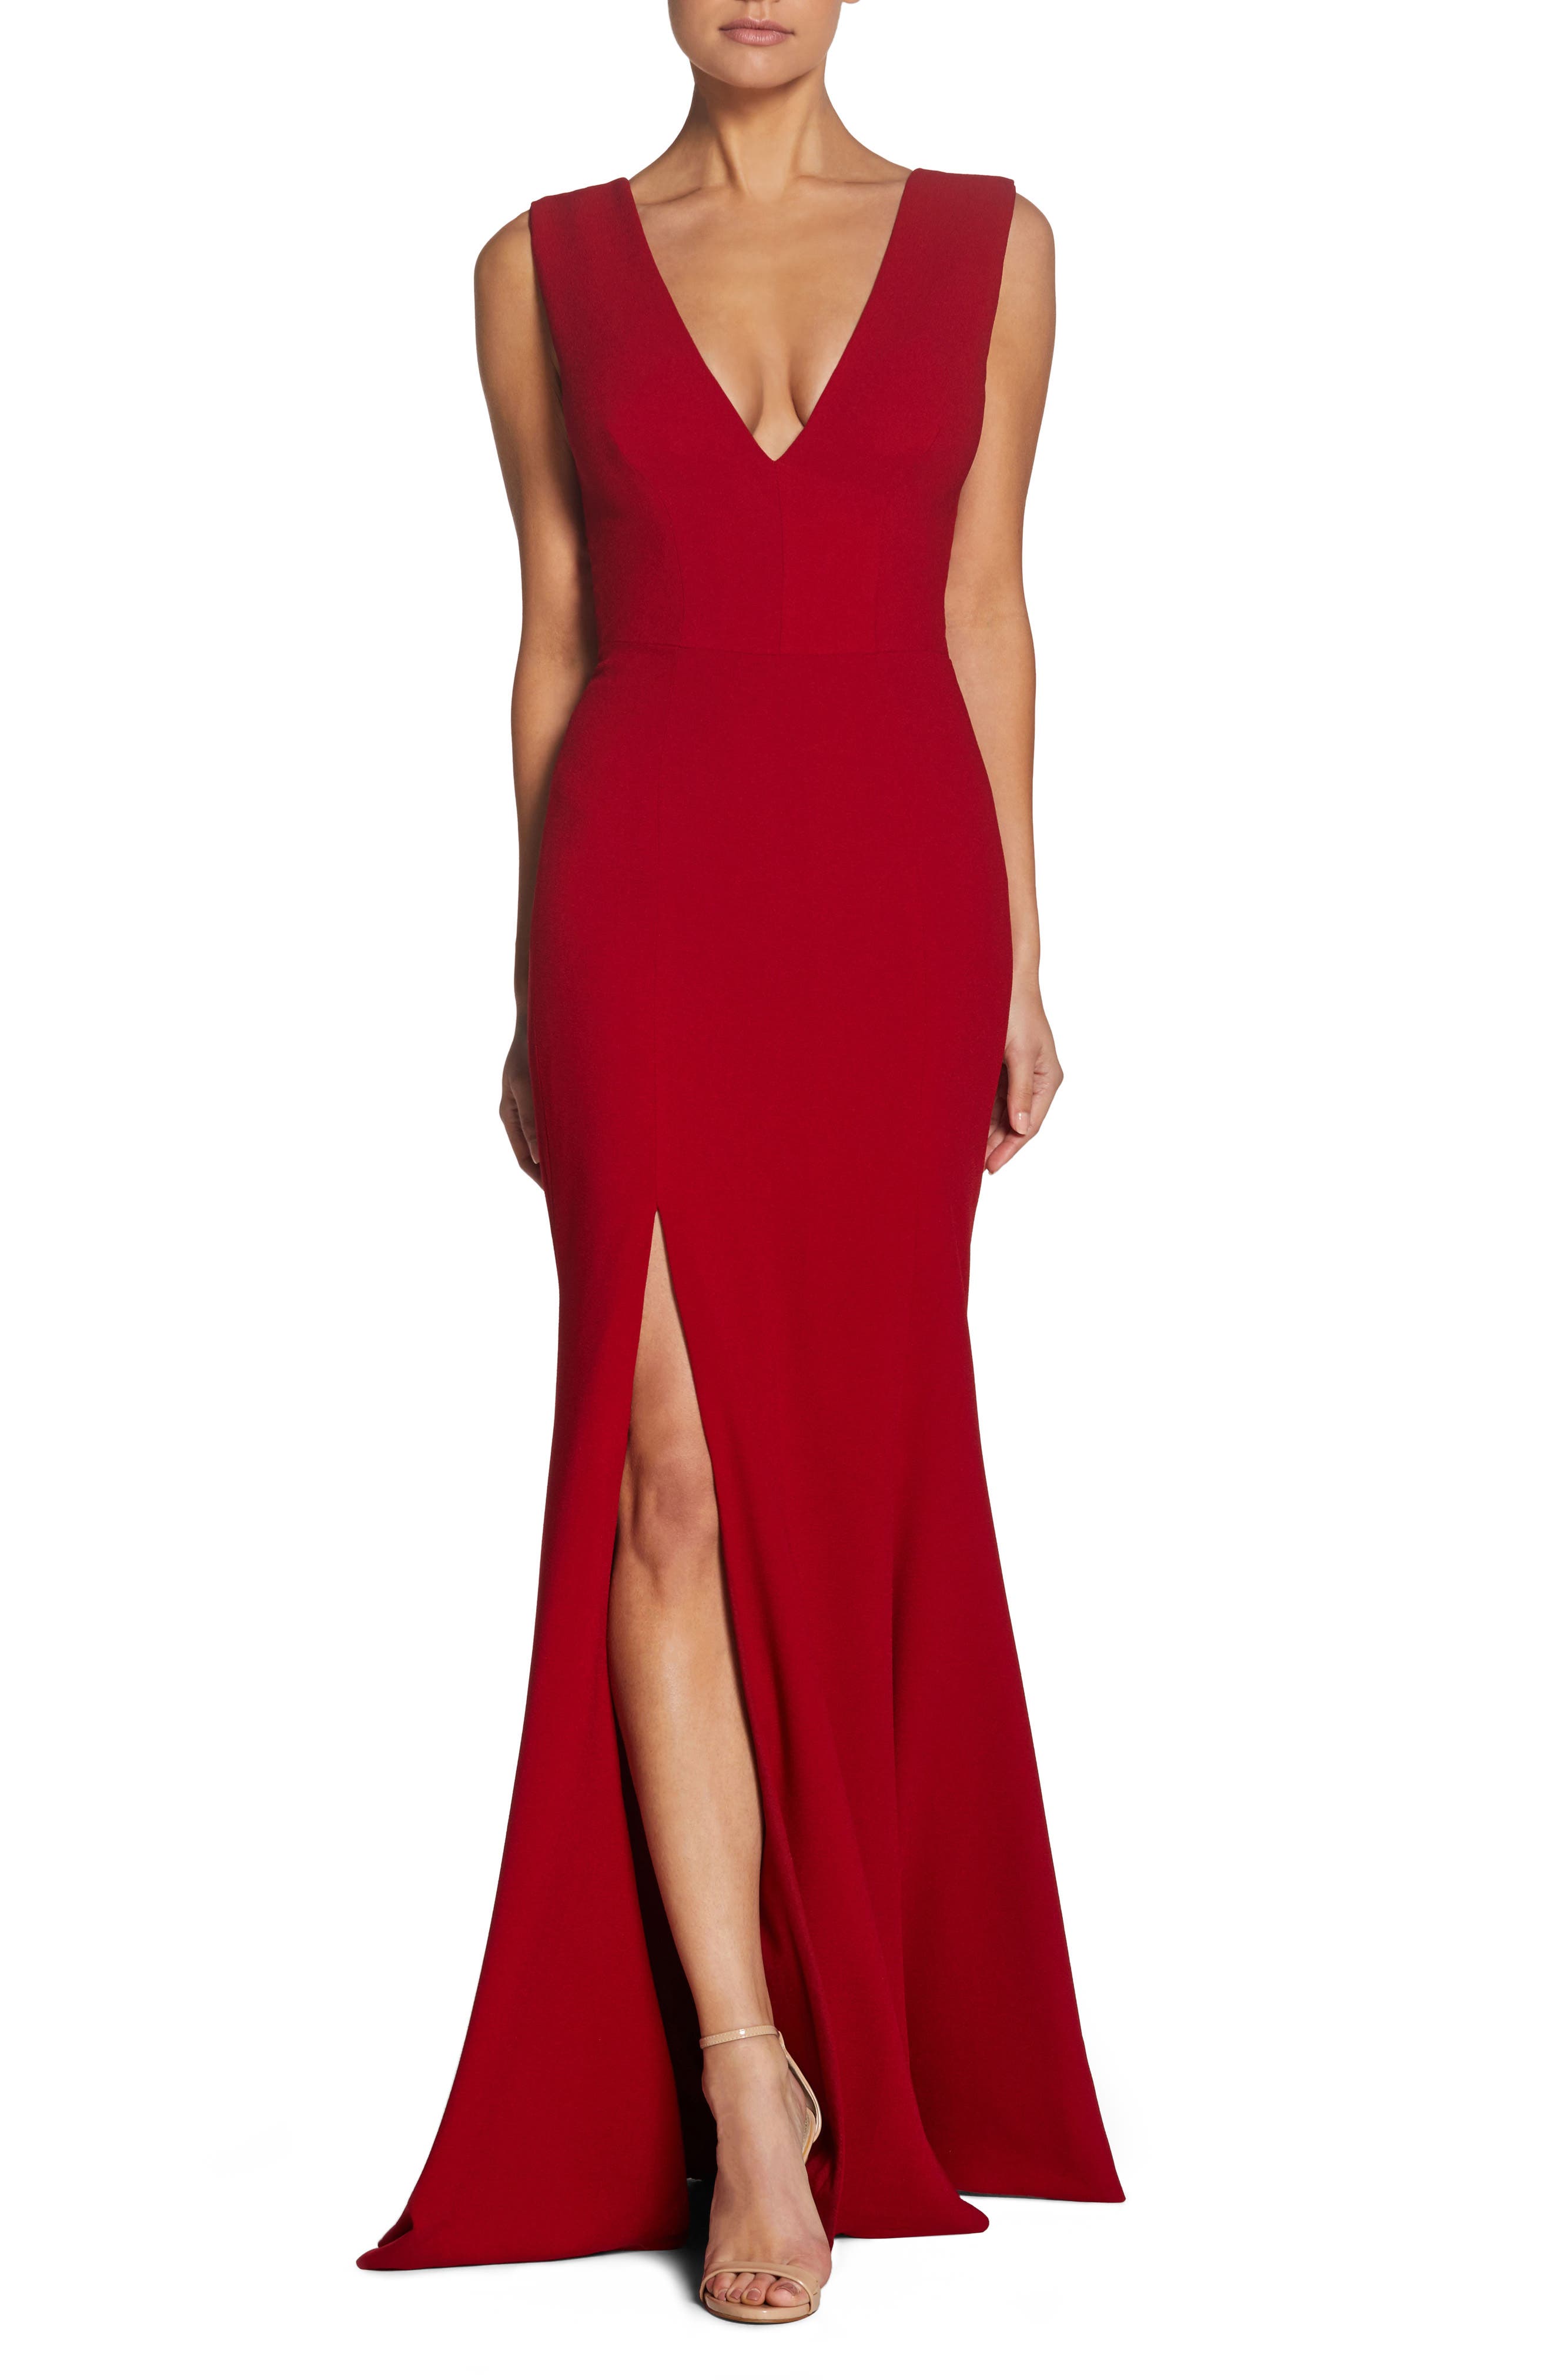 roman red lace dress